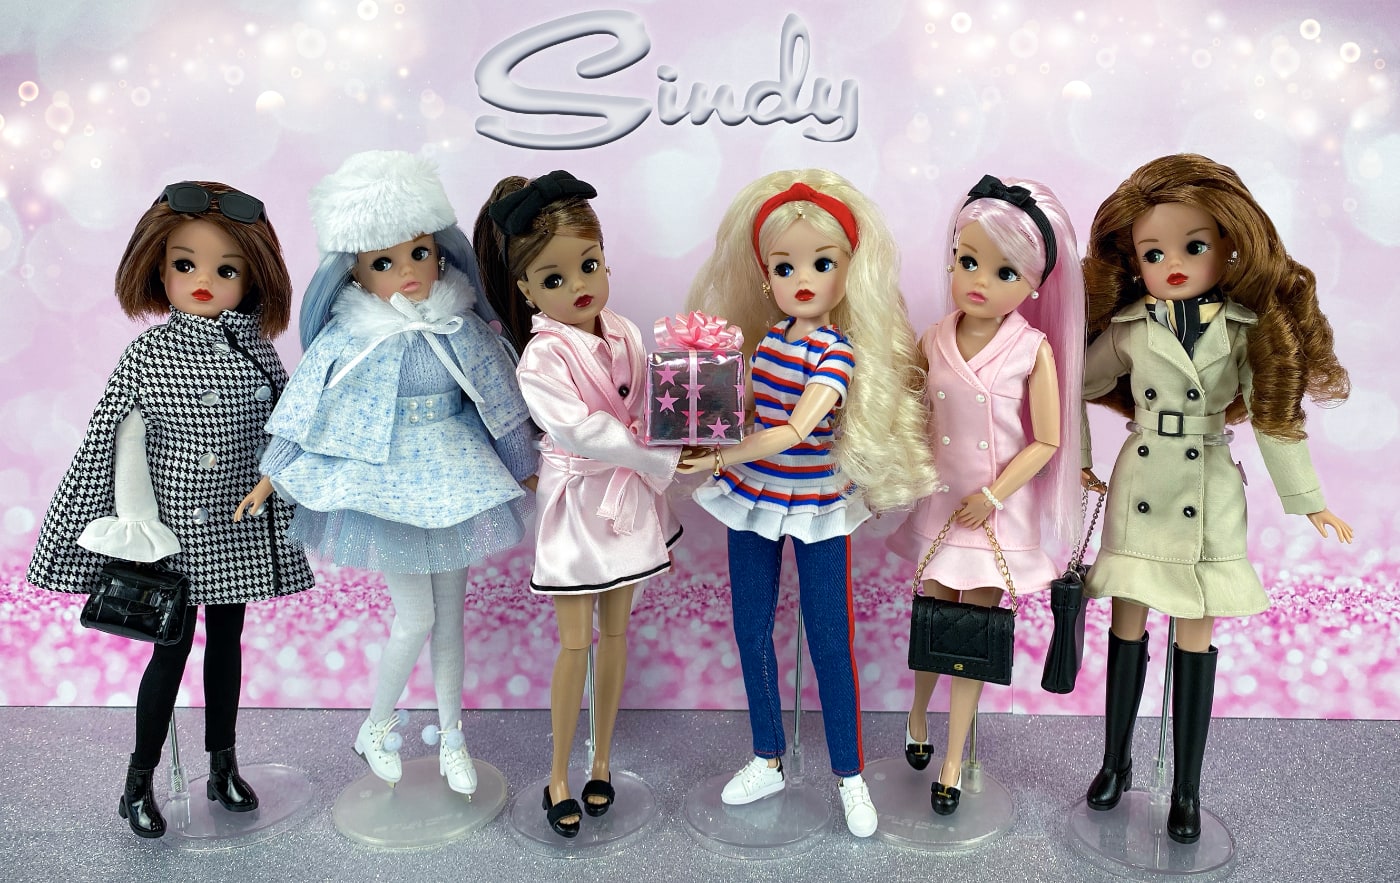 1960s sindy dolls for sale